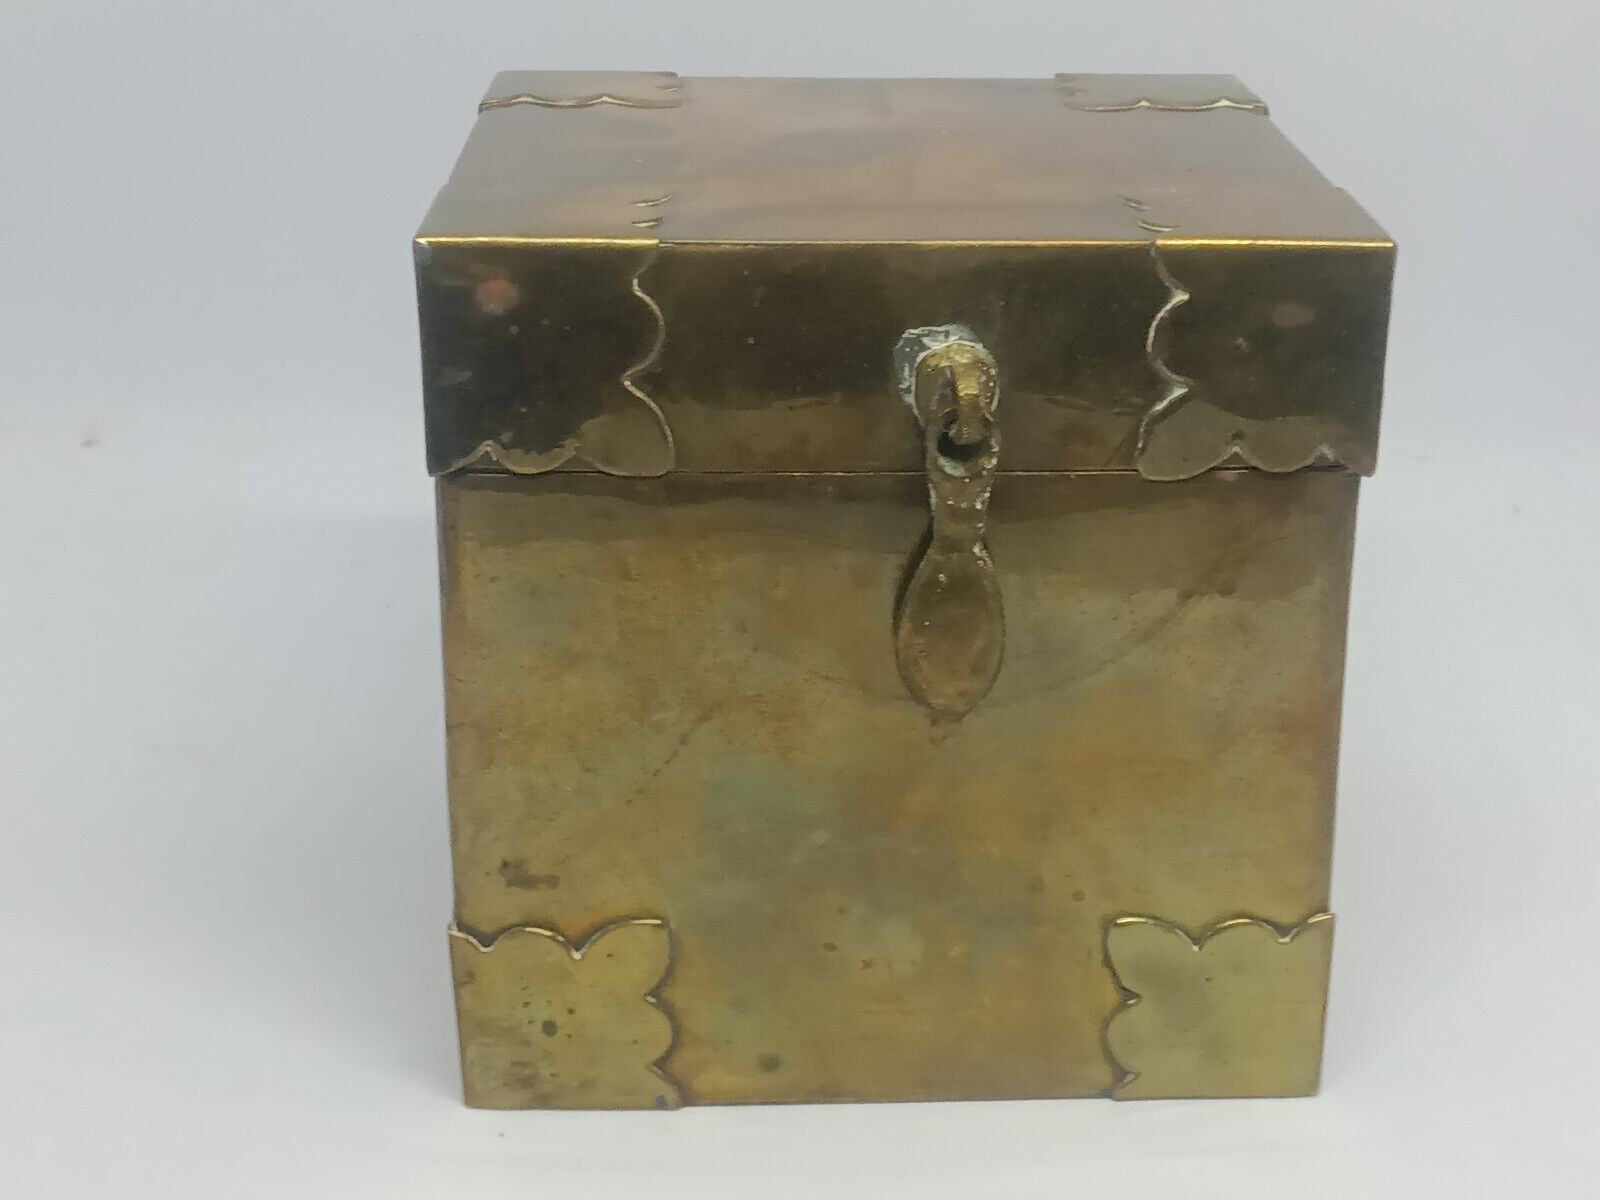 Retro brass 4x4x4 inch made in india trinket box